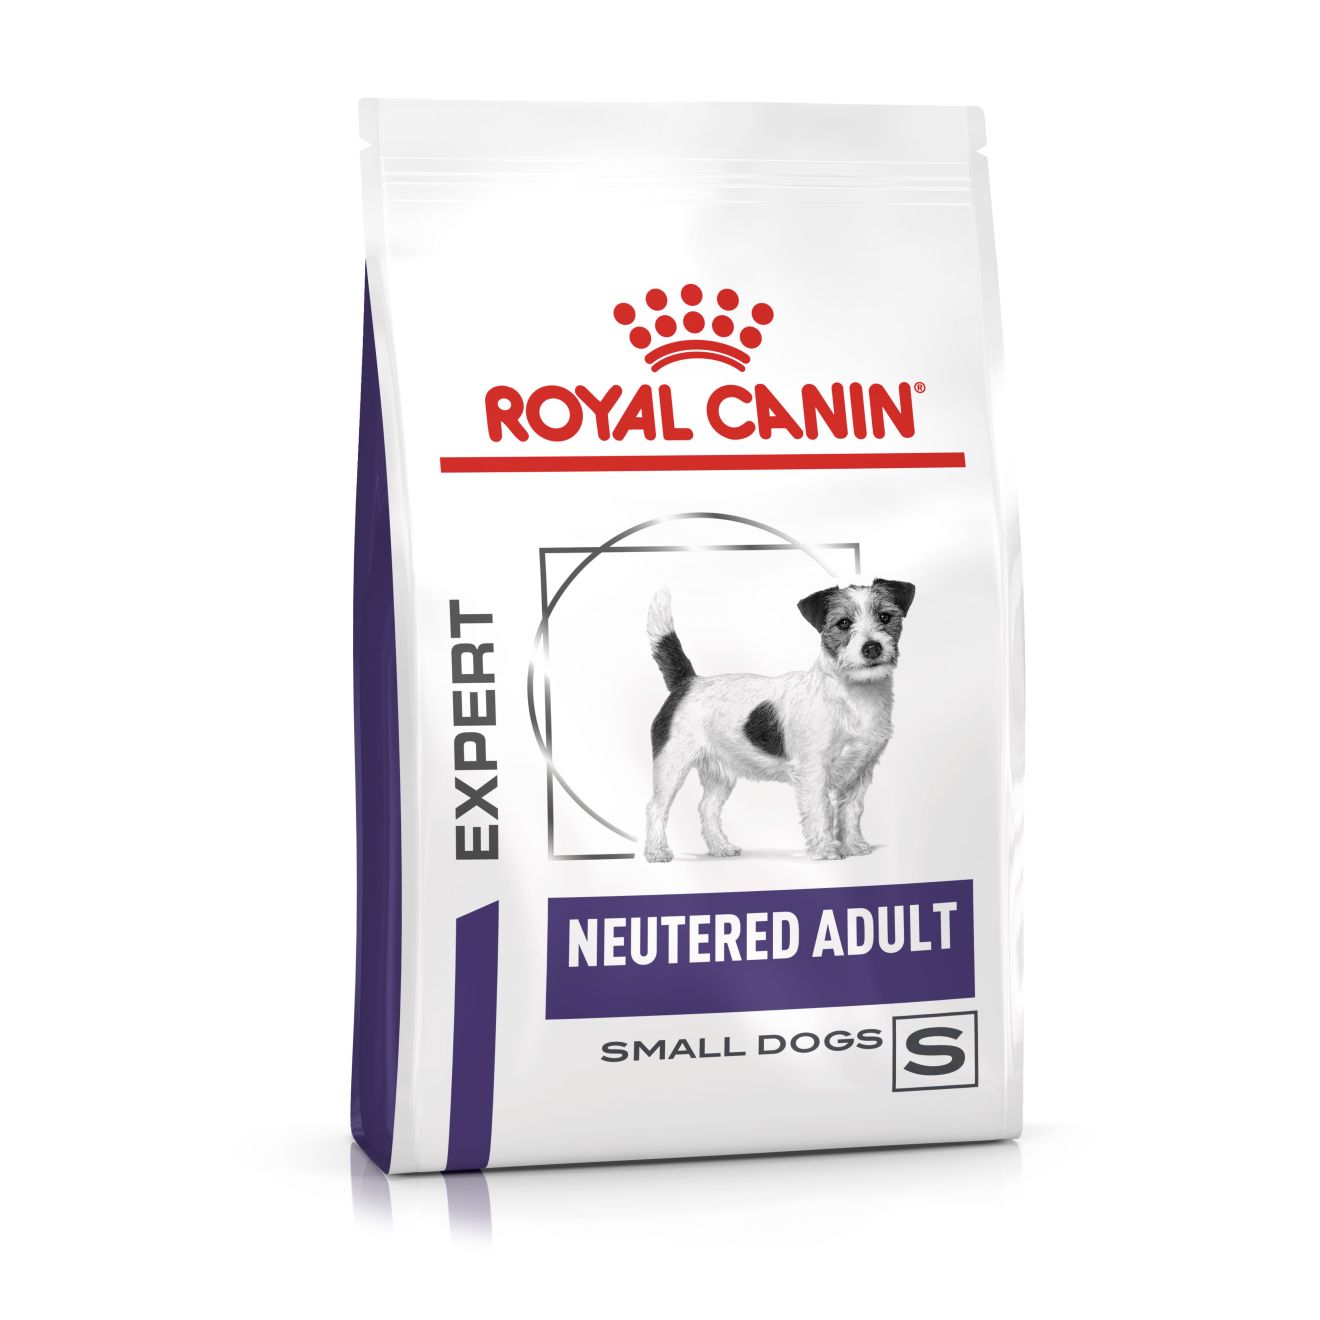 ROYAL CANIN Veterinary NEUTERED ADULT SMALL DOGS Trockenfutter für Hunde 1,5 kg